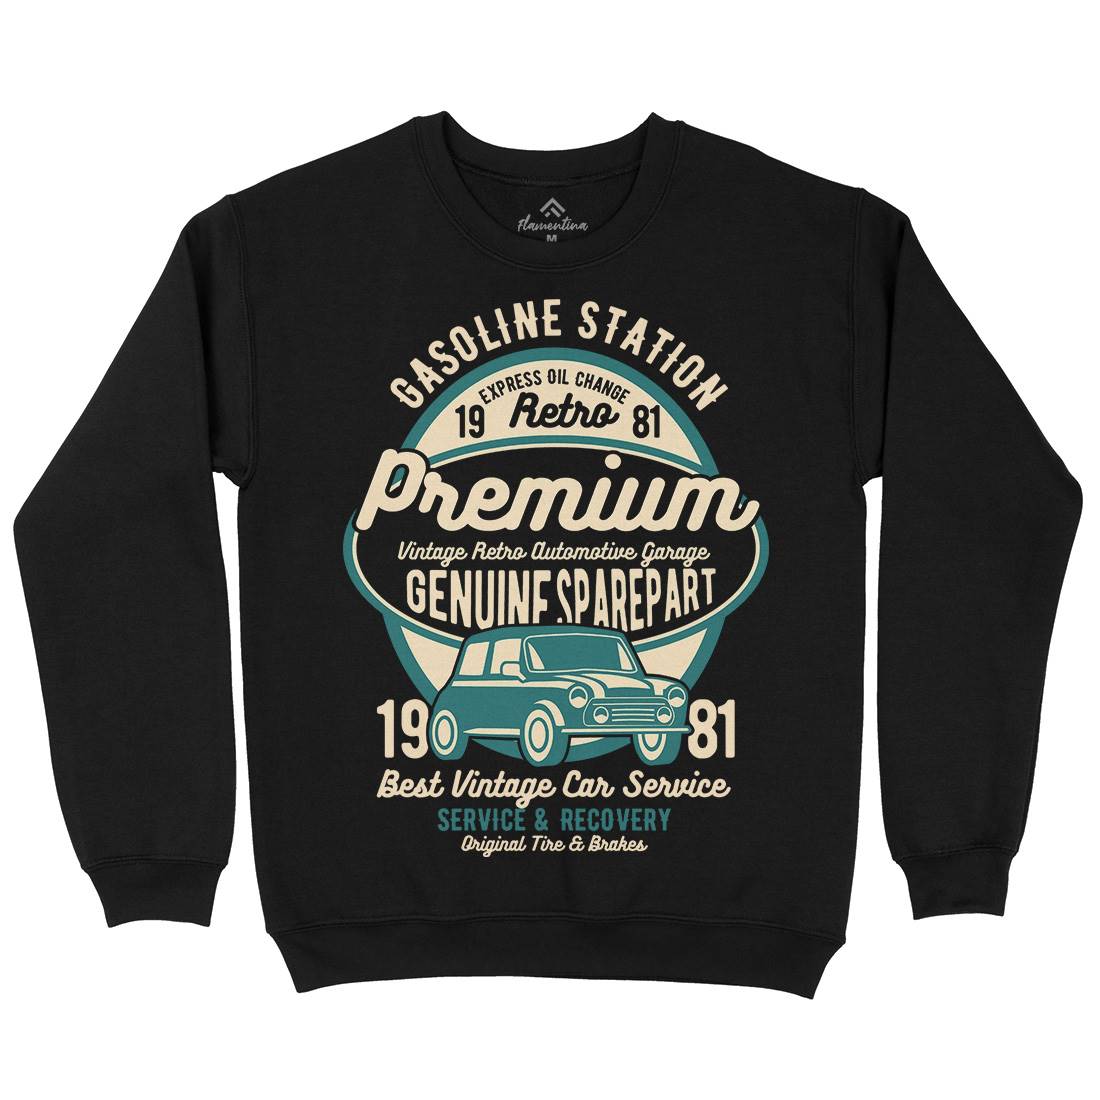 Premium Garage Kids Crew Neck Sweatshirt Cars B436